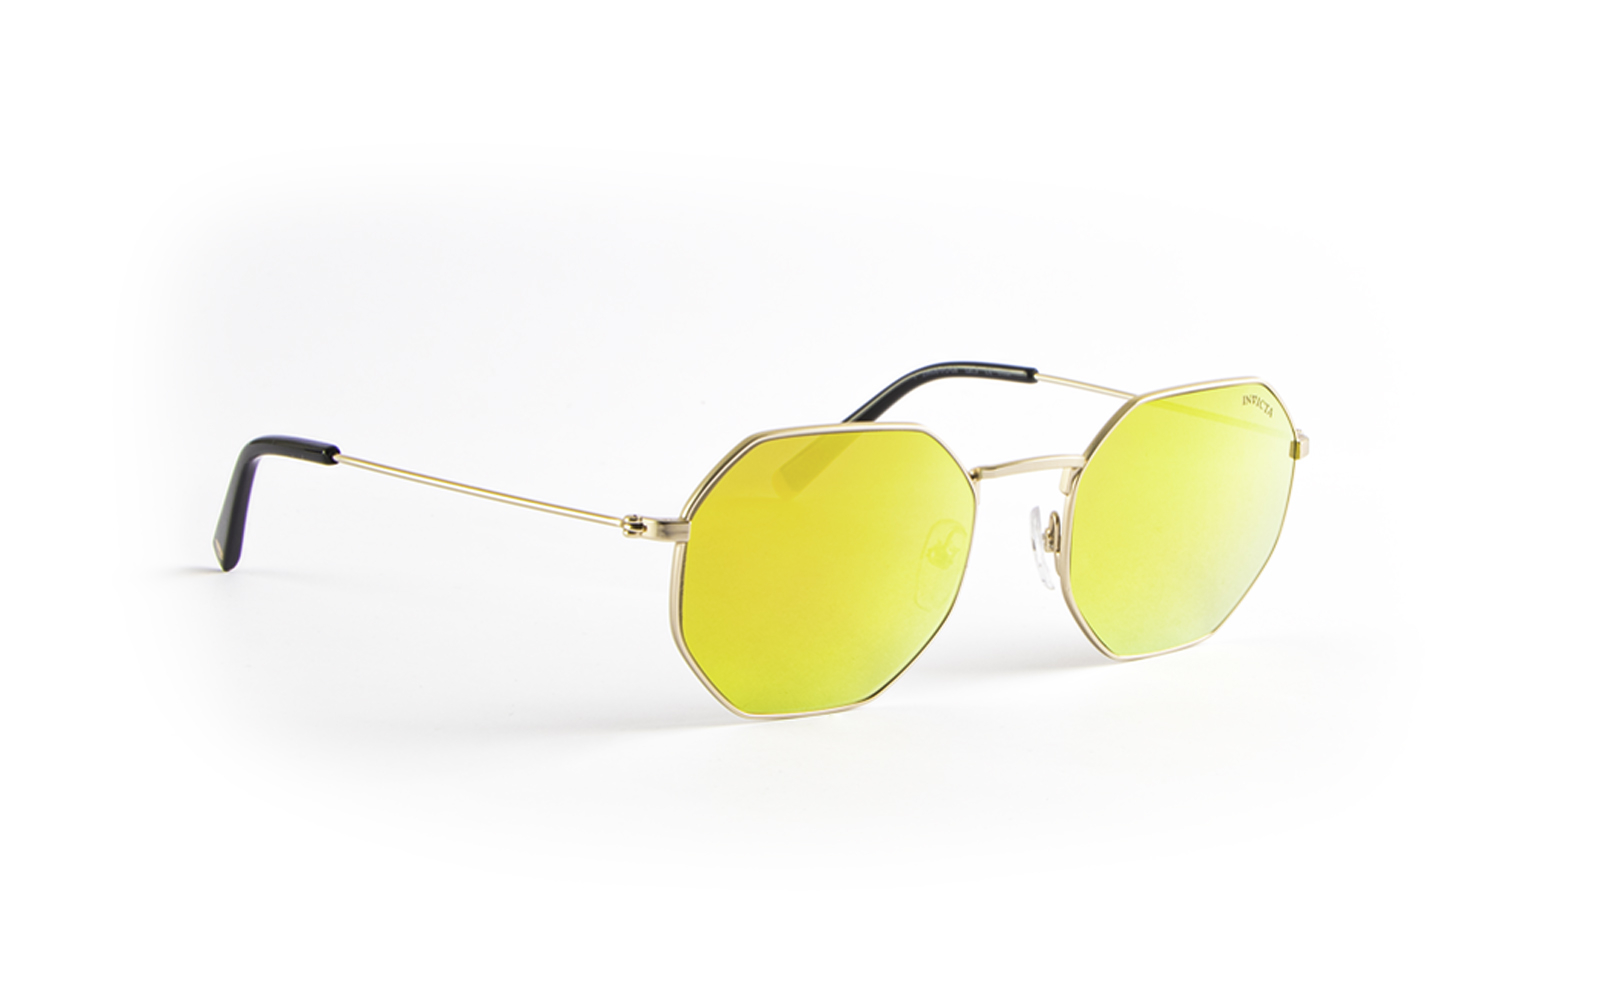 Invicta Men's I-Force Octagonal Sunglasses, Yellow (29606-IFO-08)